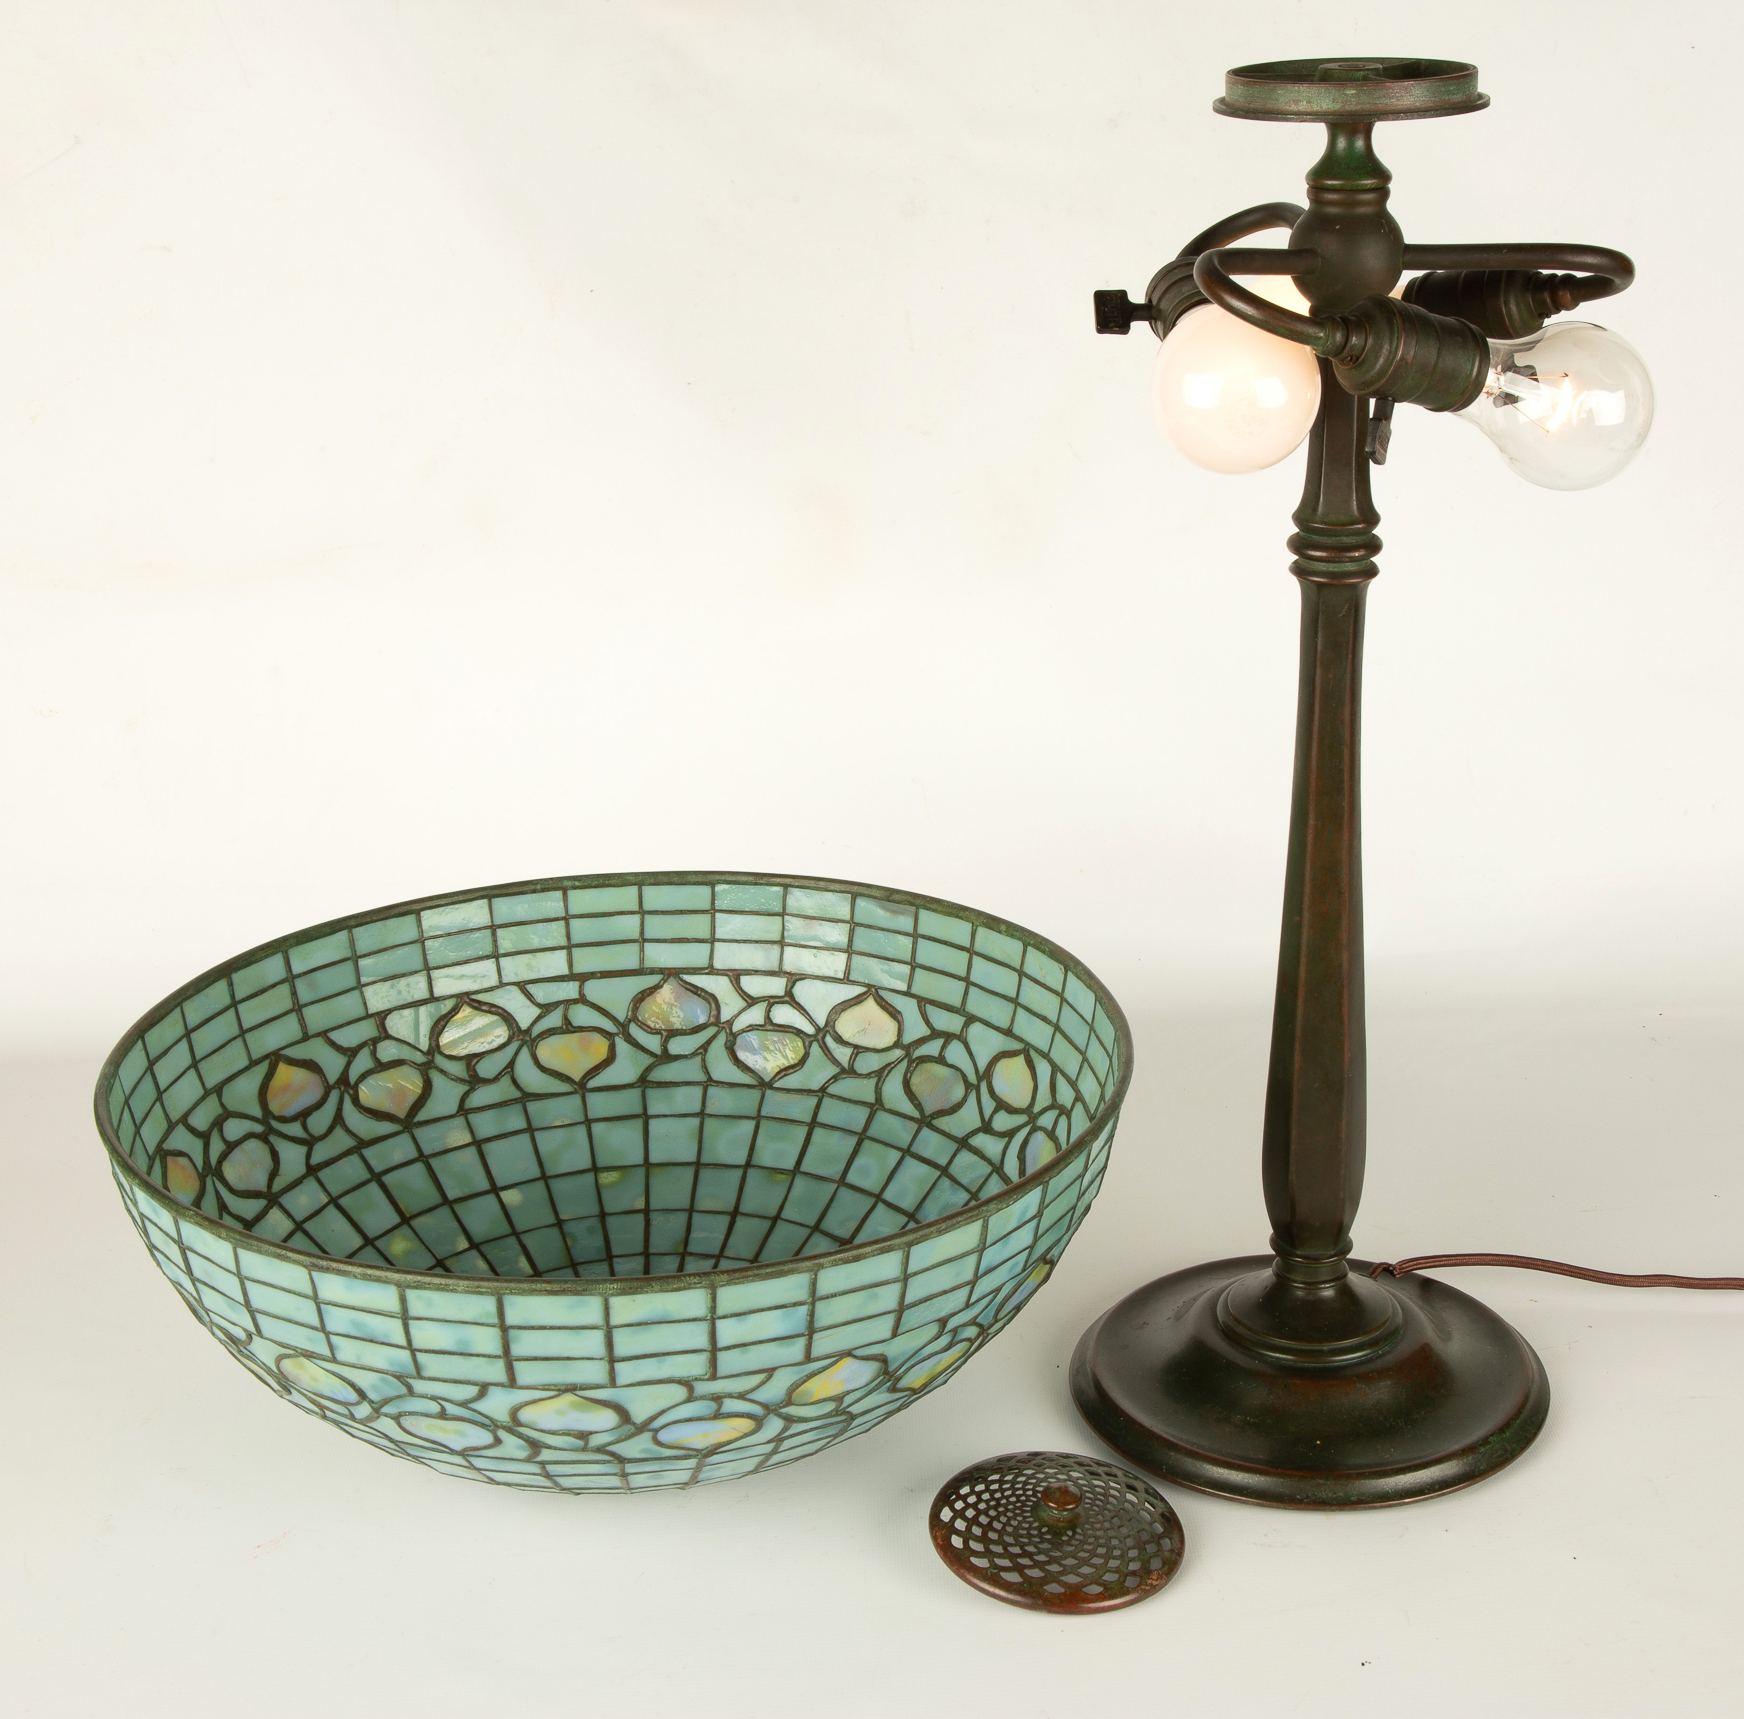 Tiffany Studios, New York, Acorn Table Lamp - Image 3 of 7